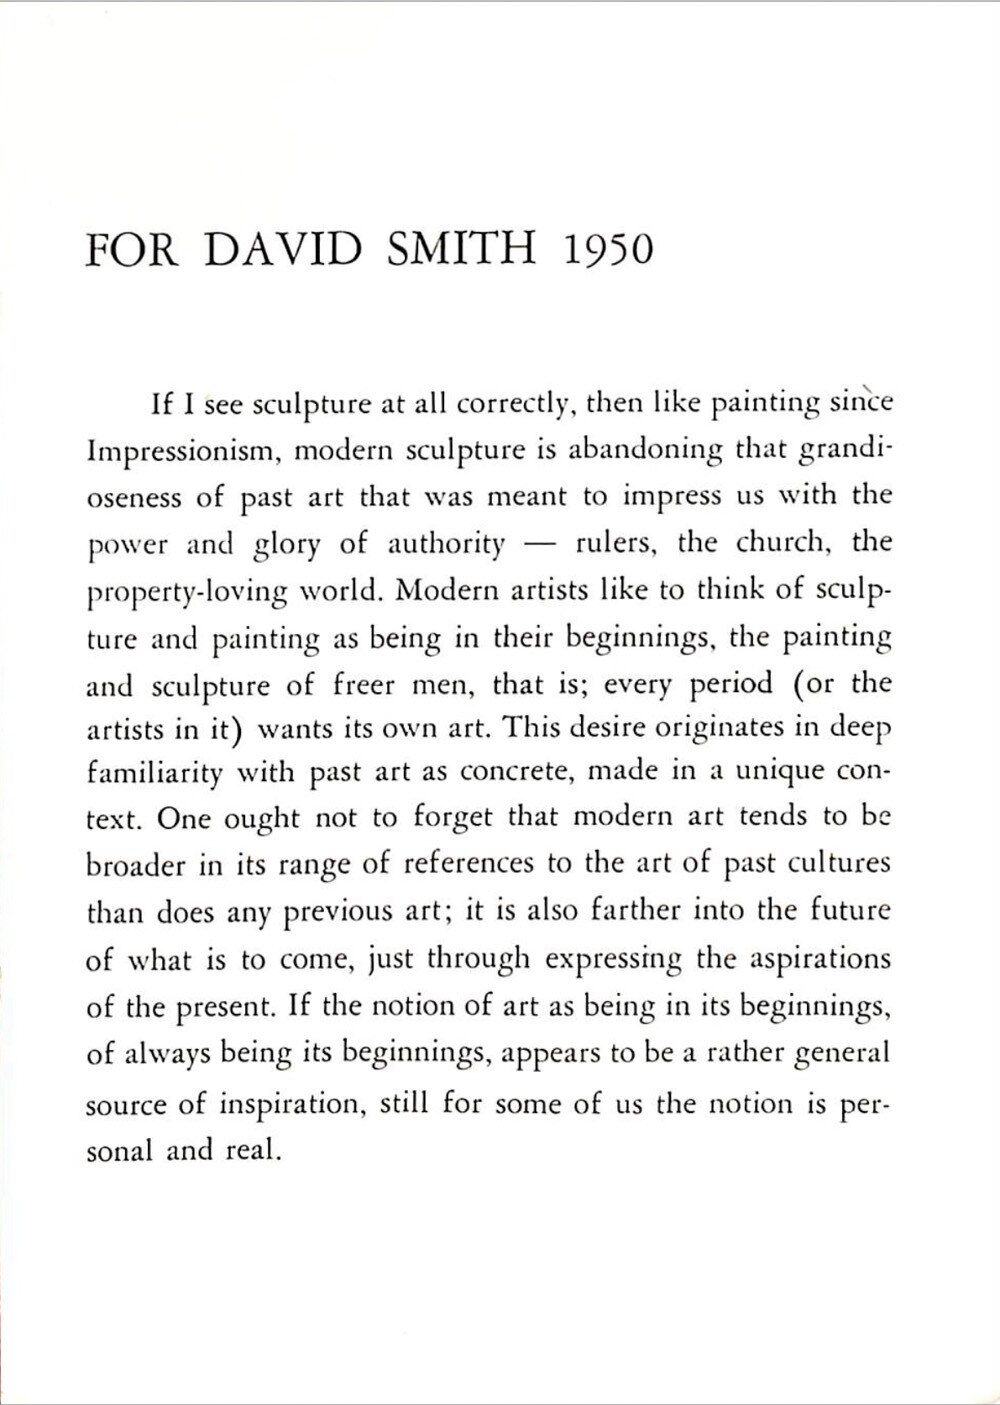 David Smith at Willard Gallery exhibition catalogue, 1050